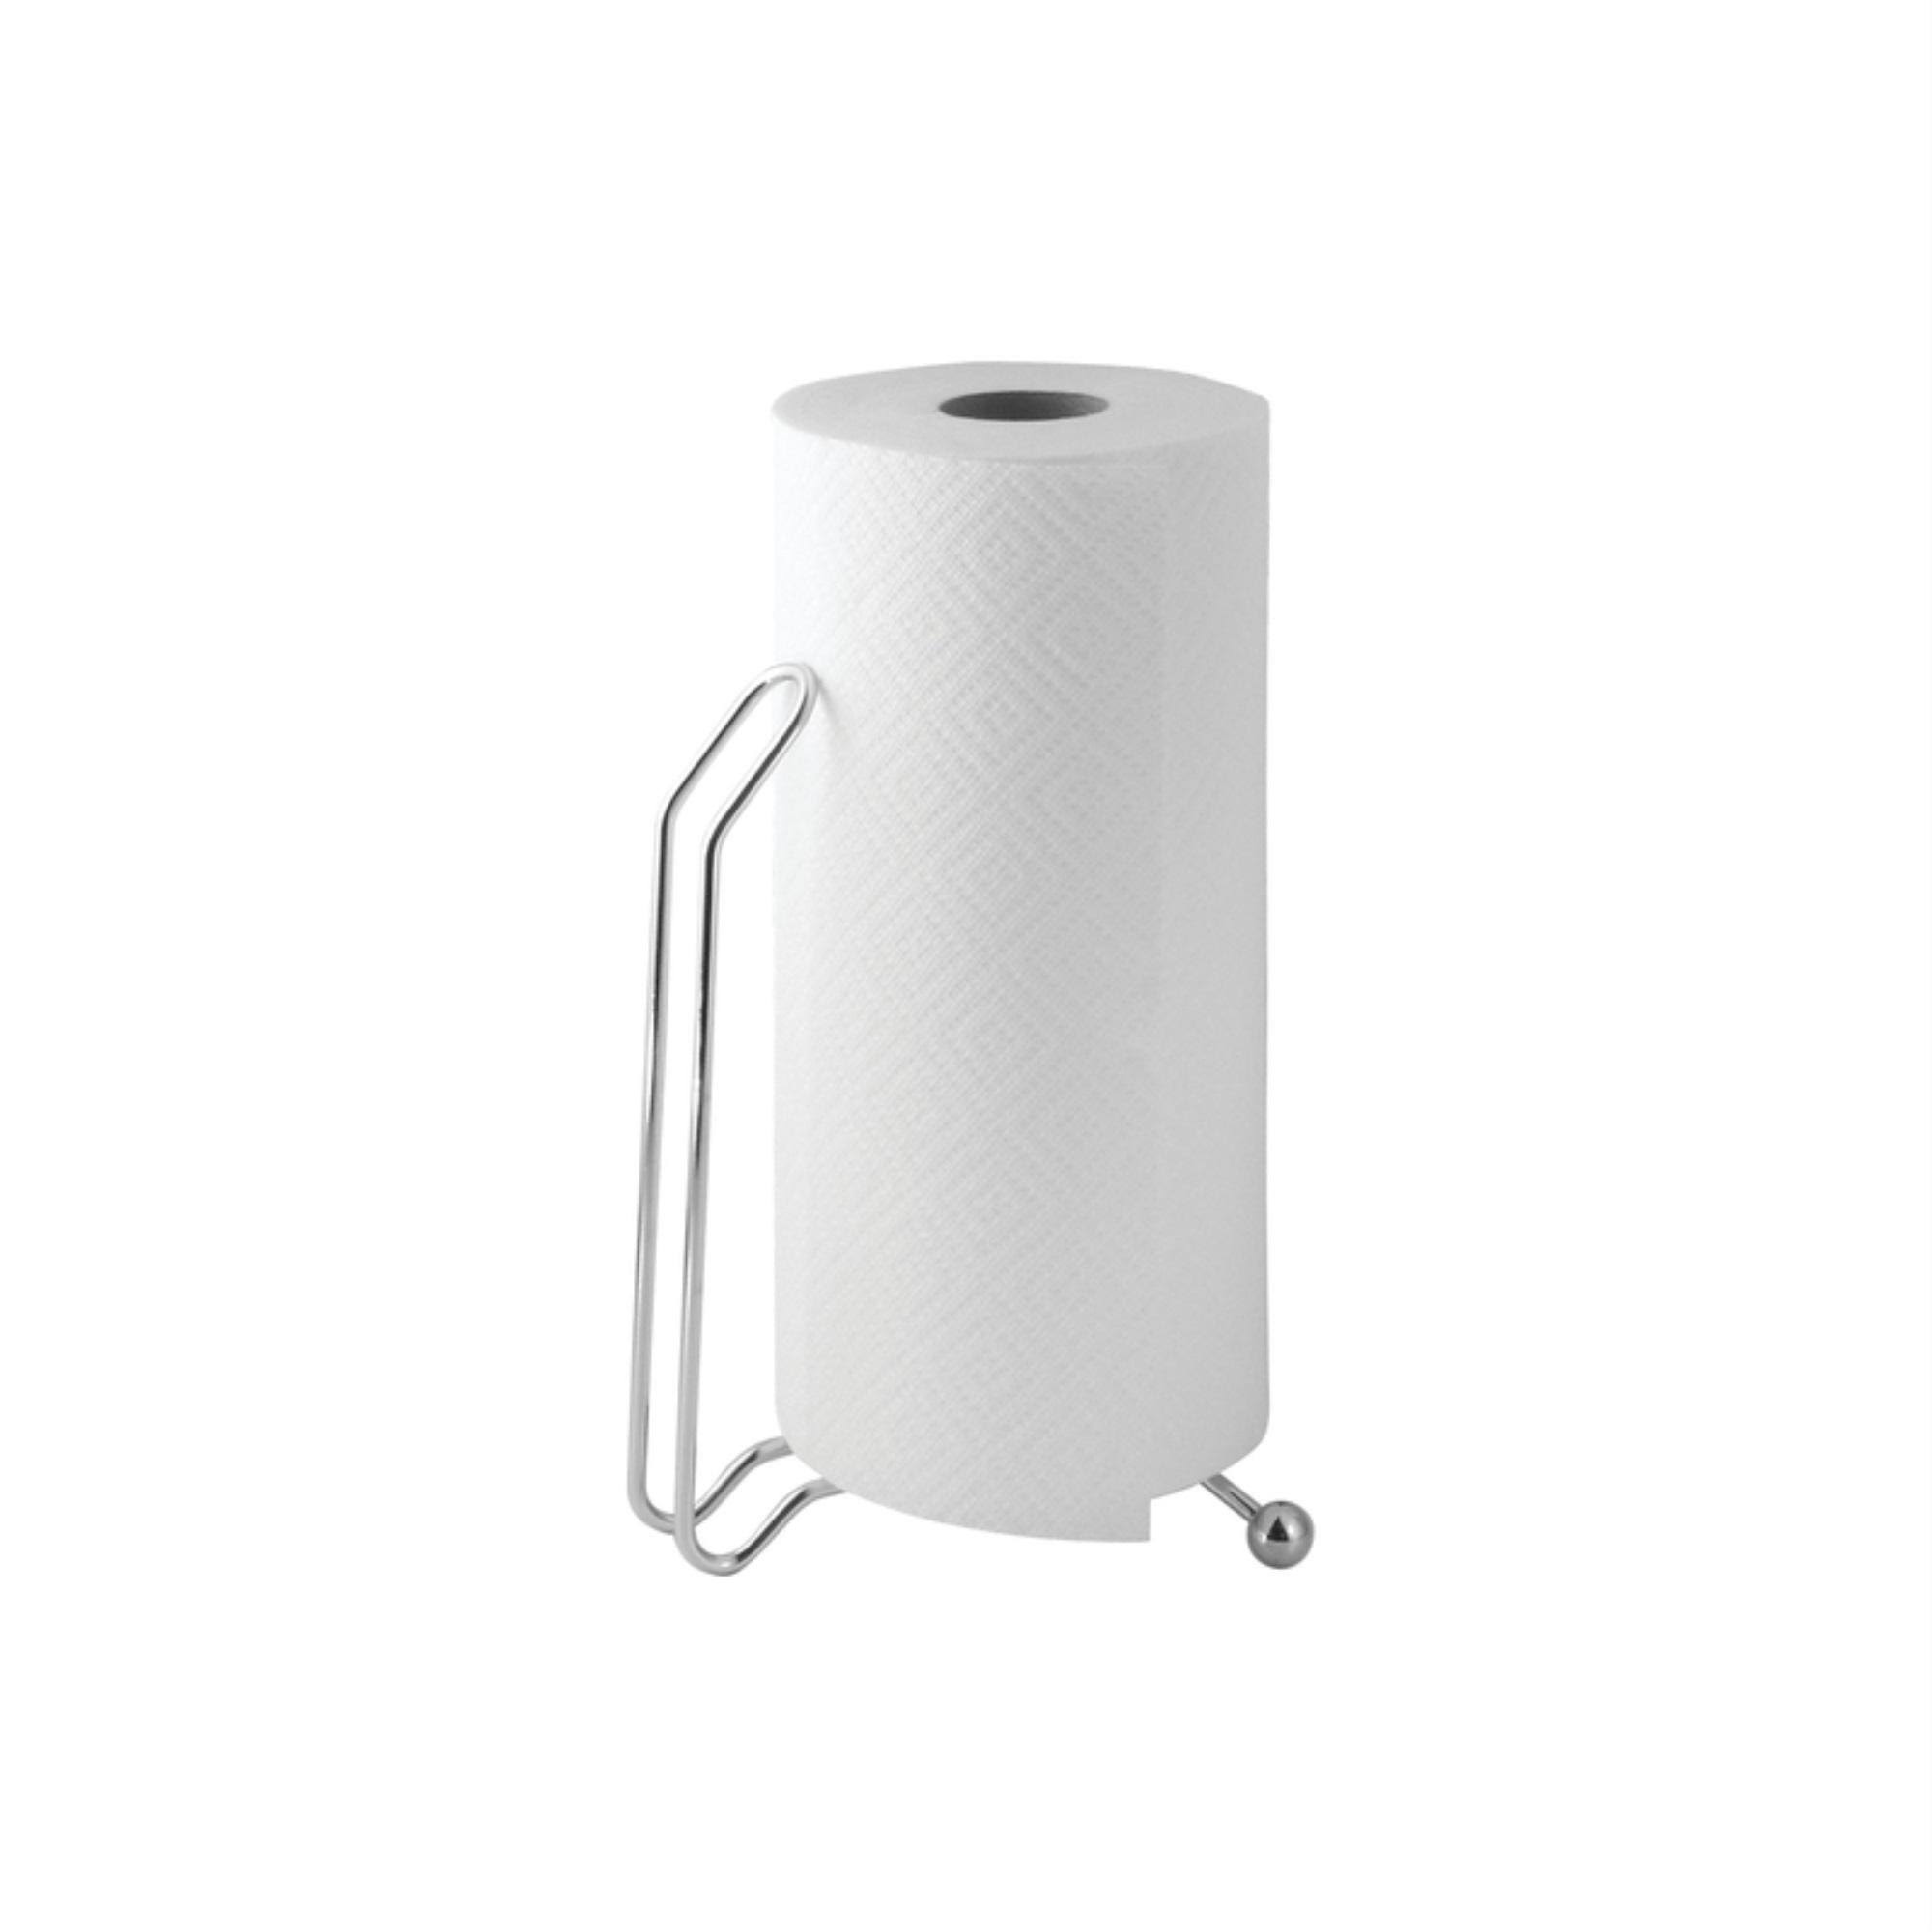 InterDesign Aria Paper Towel Holder Stand